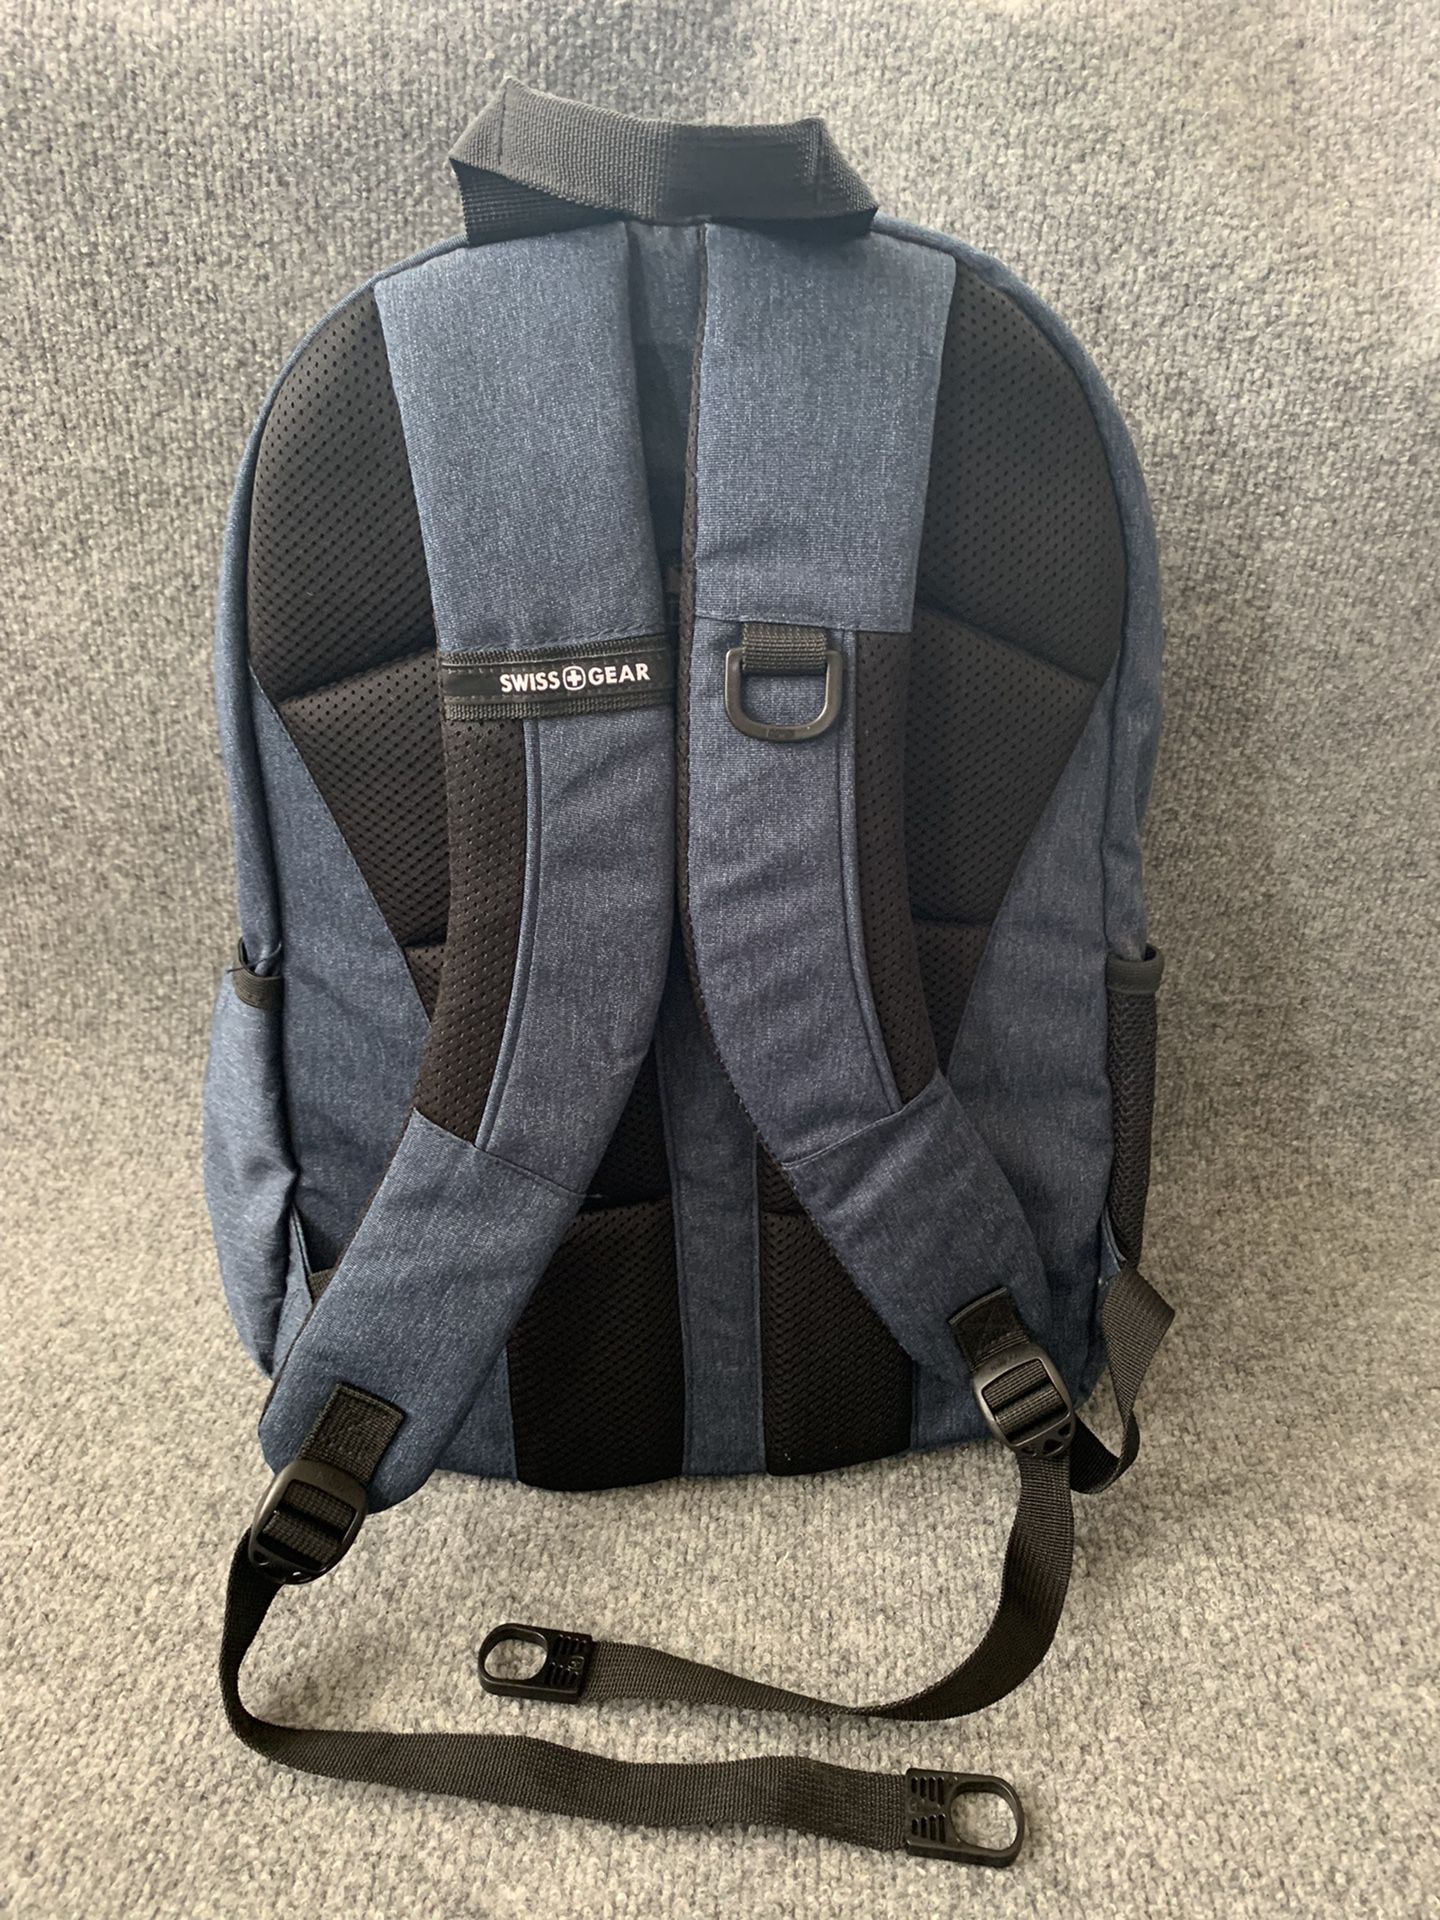 Brand New Swissgear Laptop Backpack - Navy/Black🎒 🔥🔥 